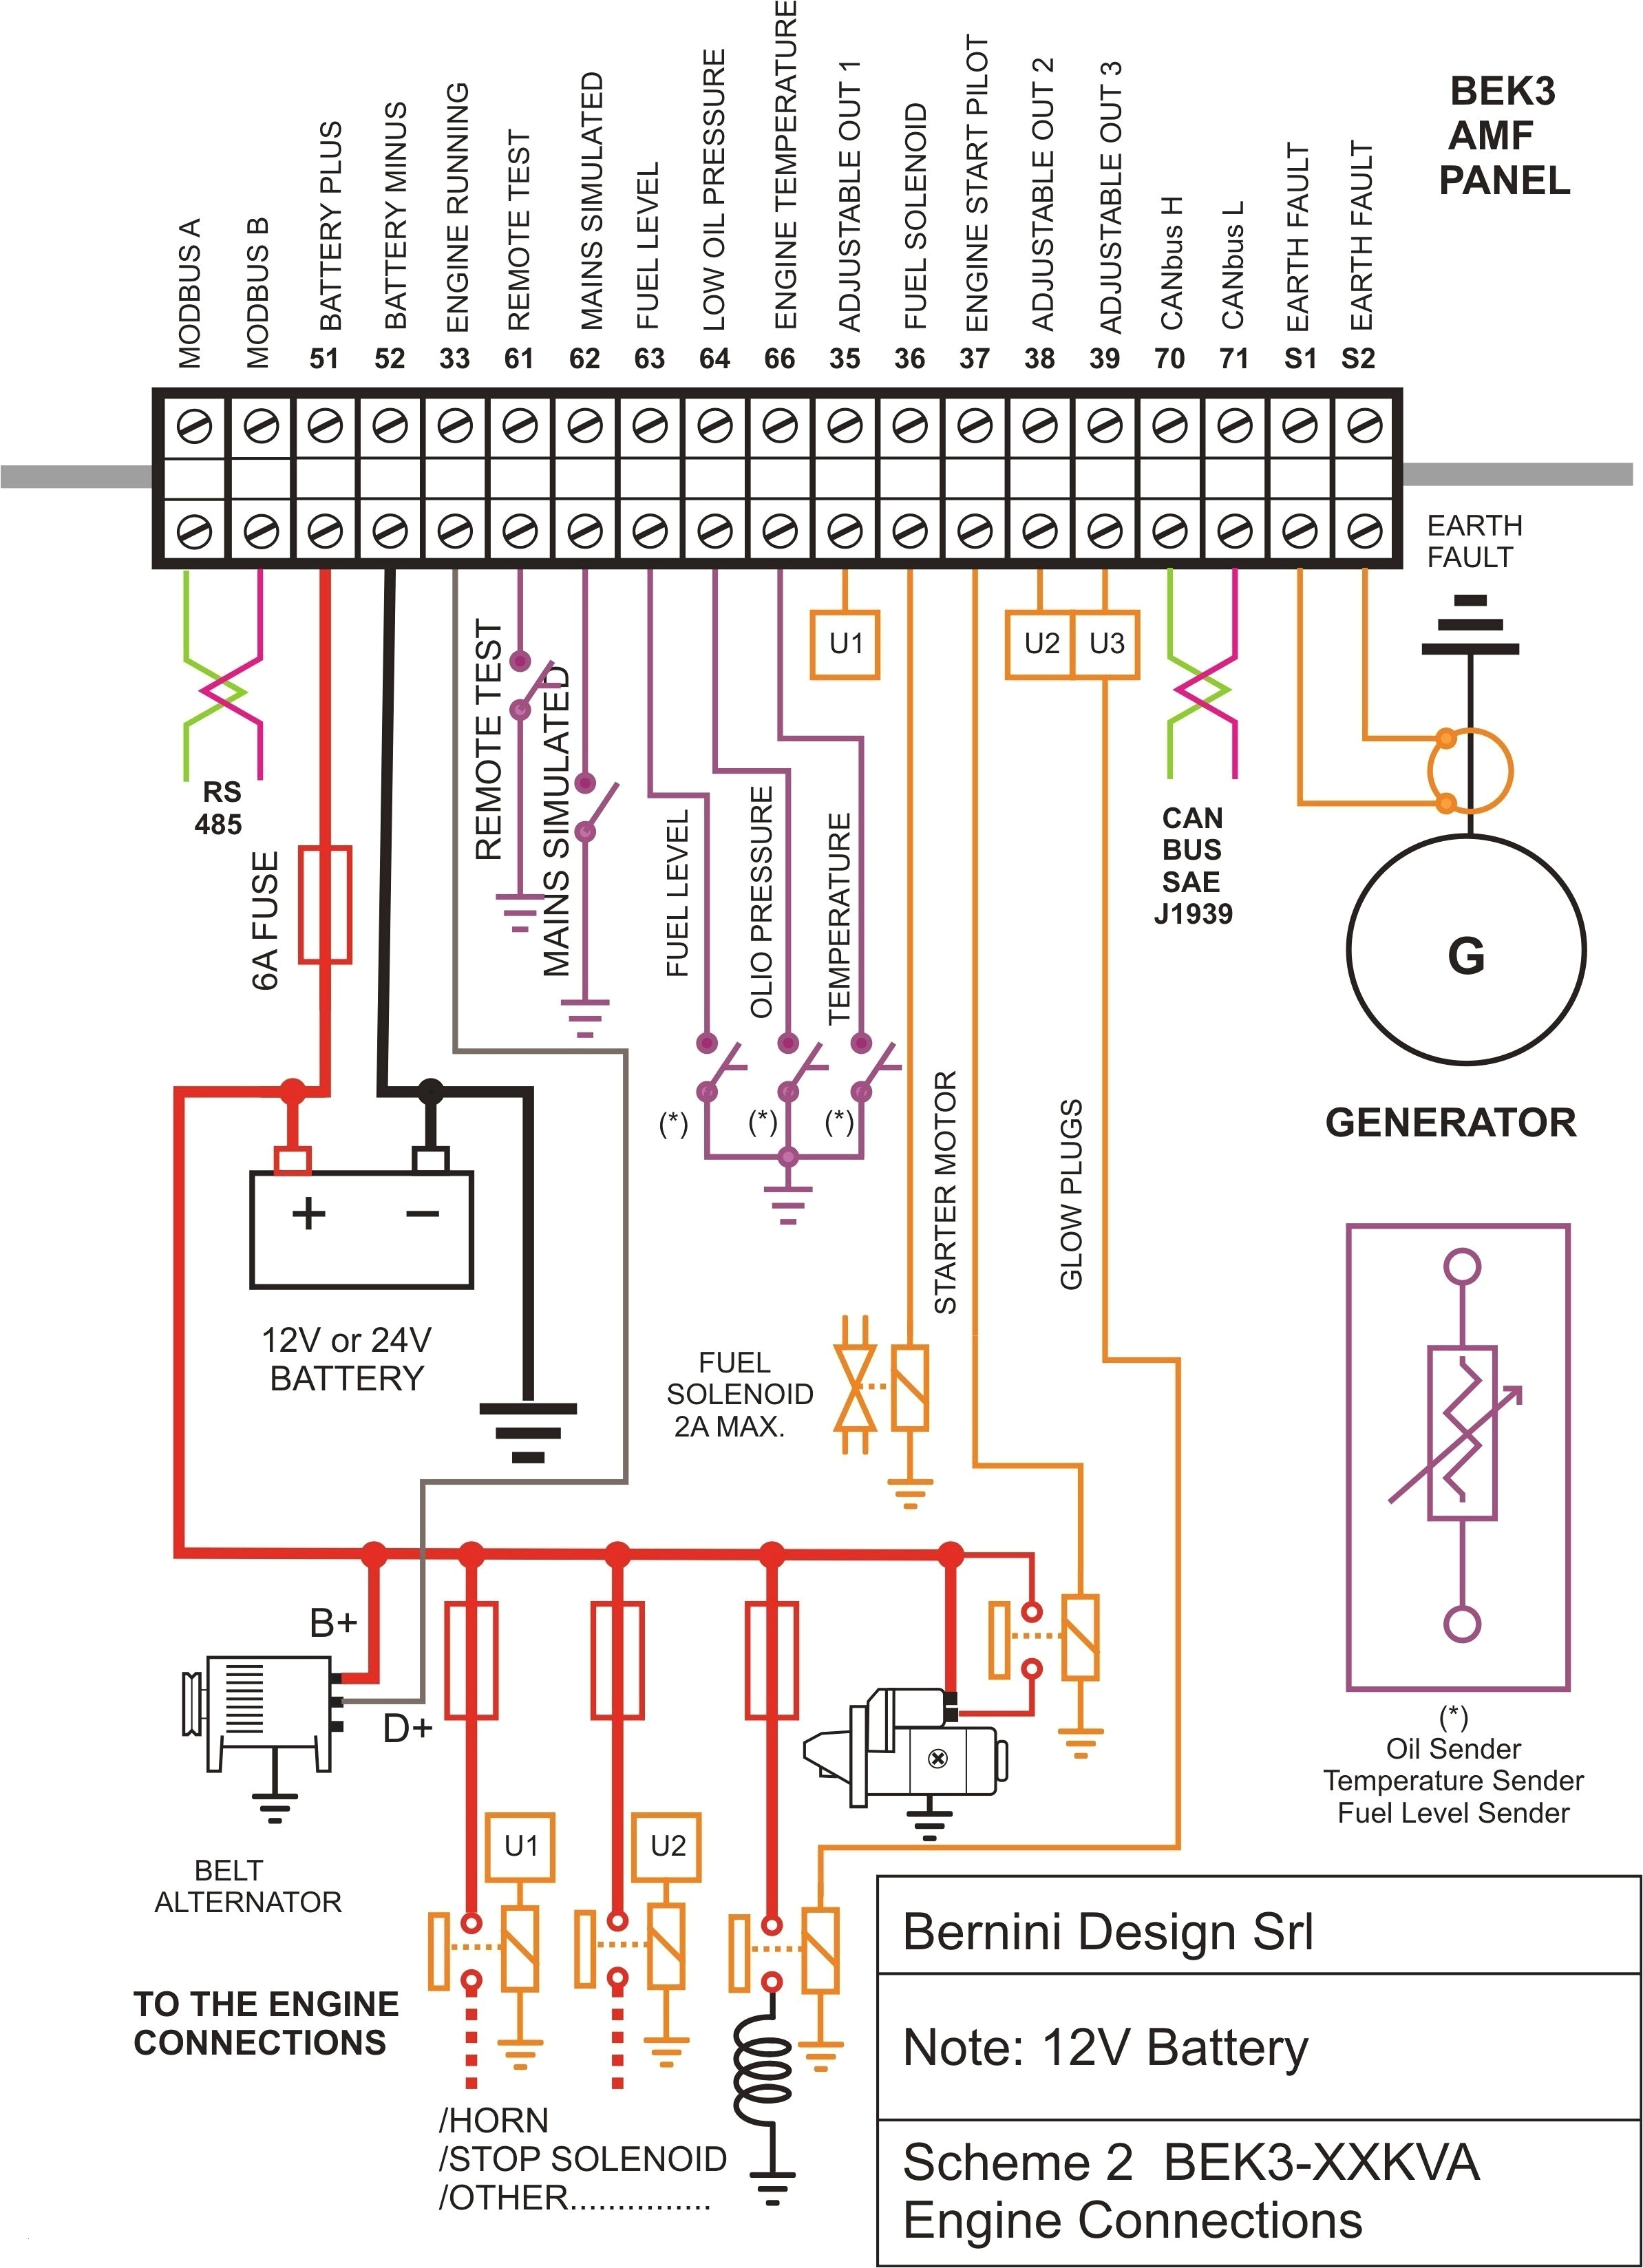 home wiring diagrams rv park schema diagram database mix rv park wiring diagram wiring diagram name